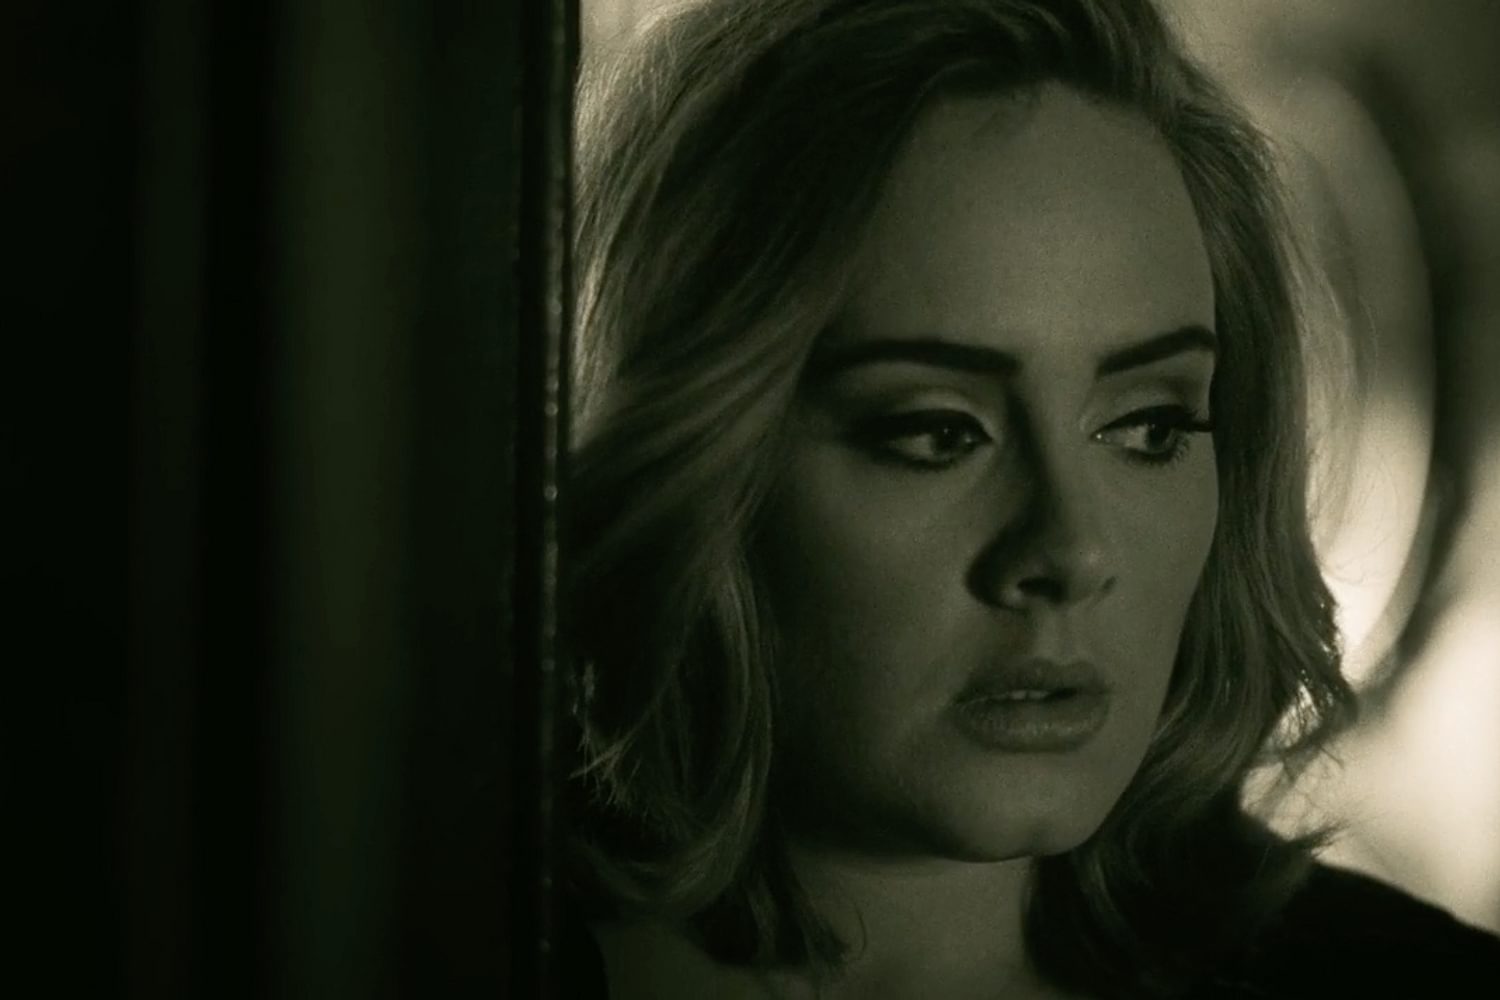 Adele returns with ‘Hello’ single